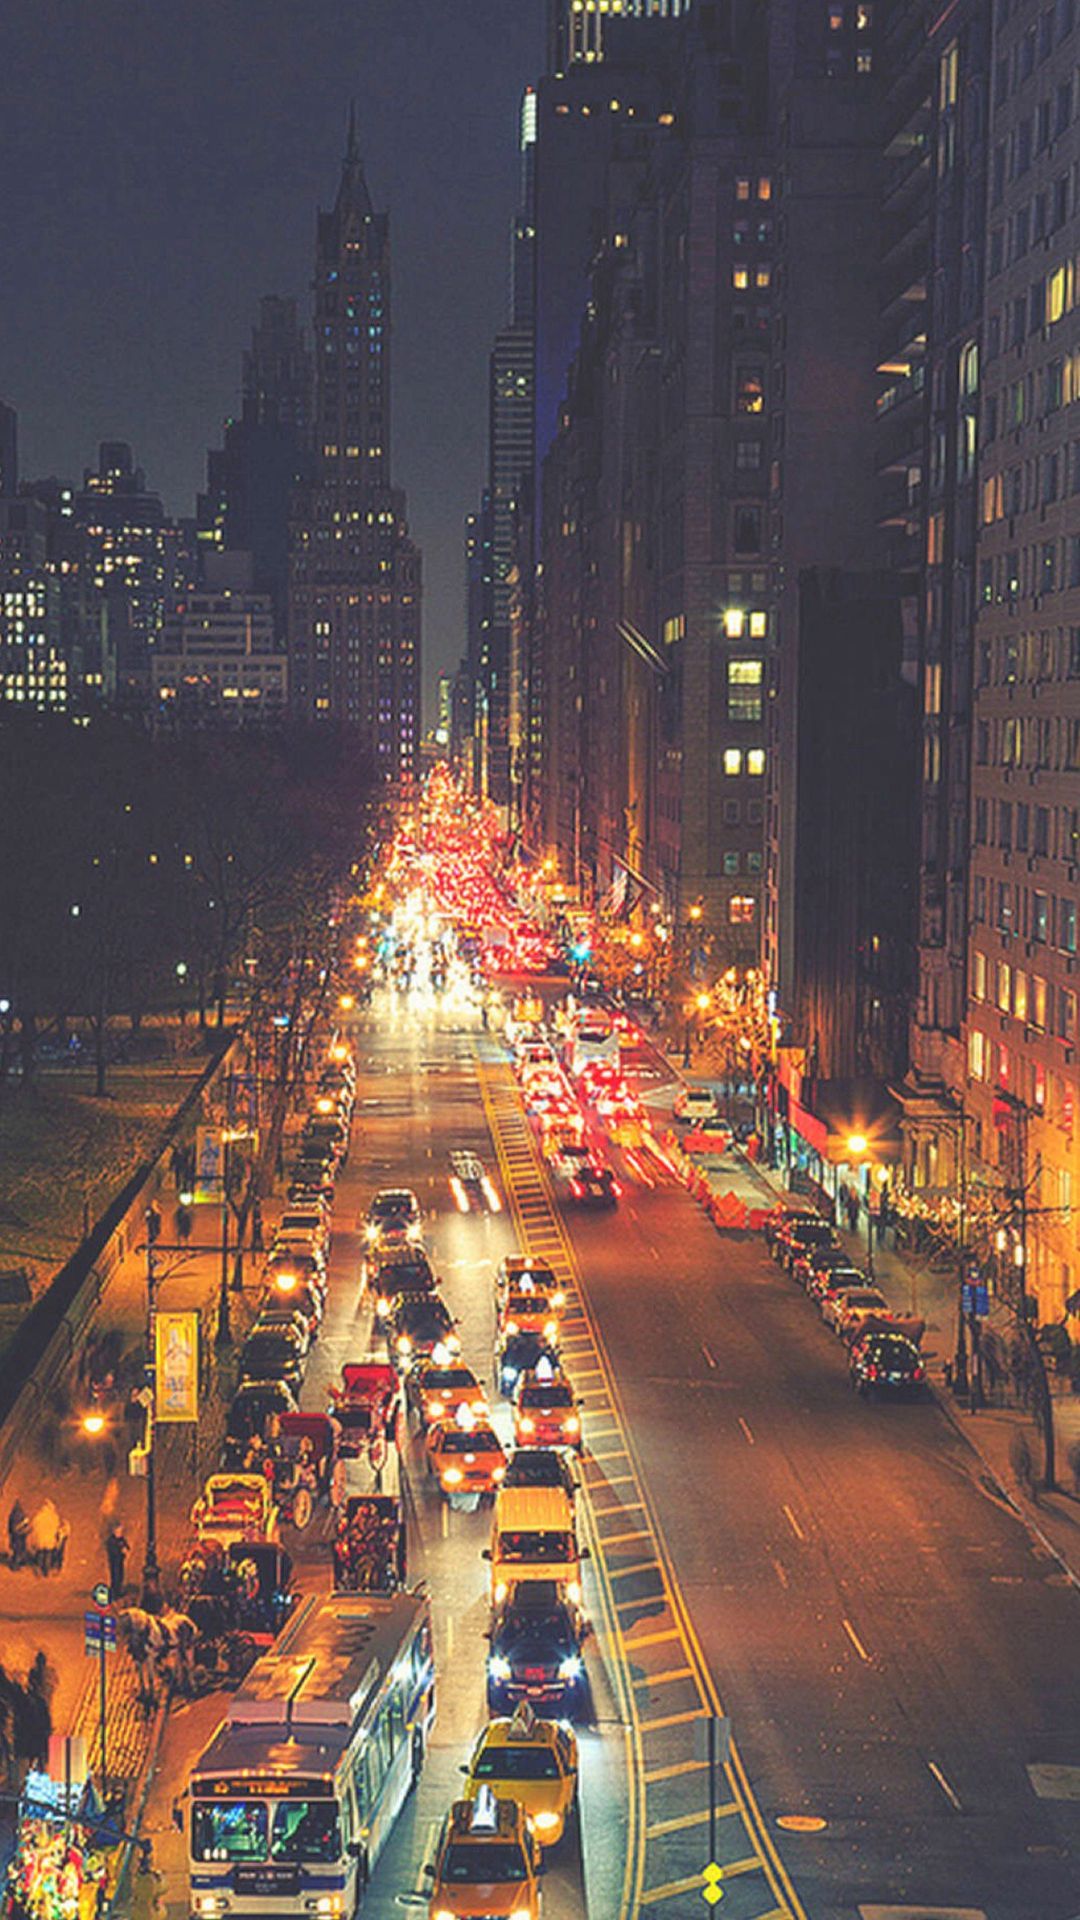 Busy new york street night traffic iphone wallpaper download iphone wallpapers ipad wallpapers one